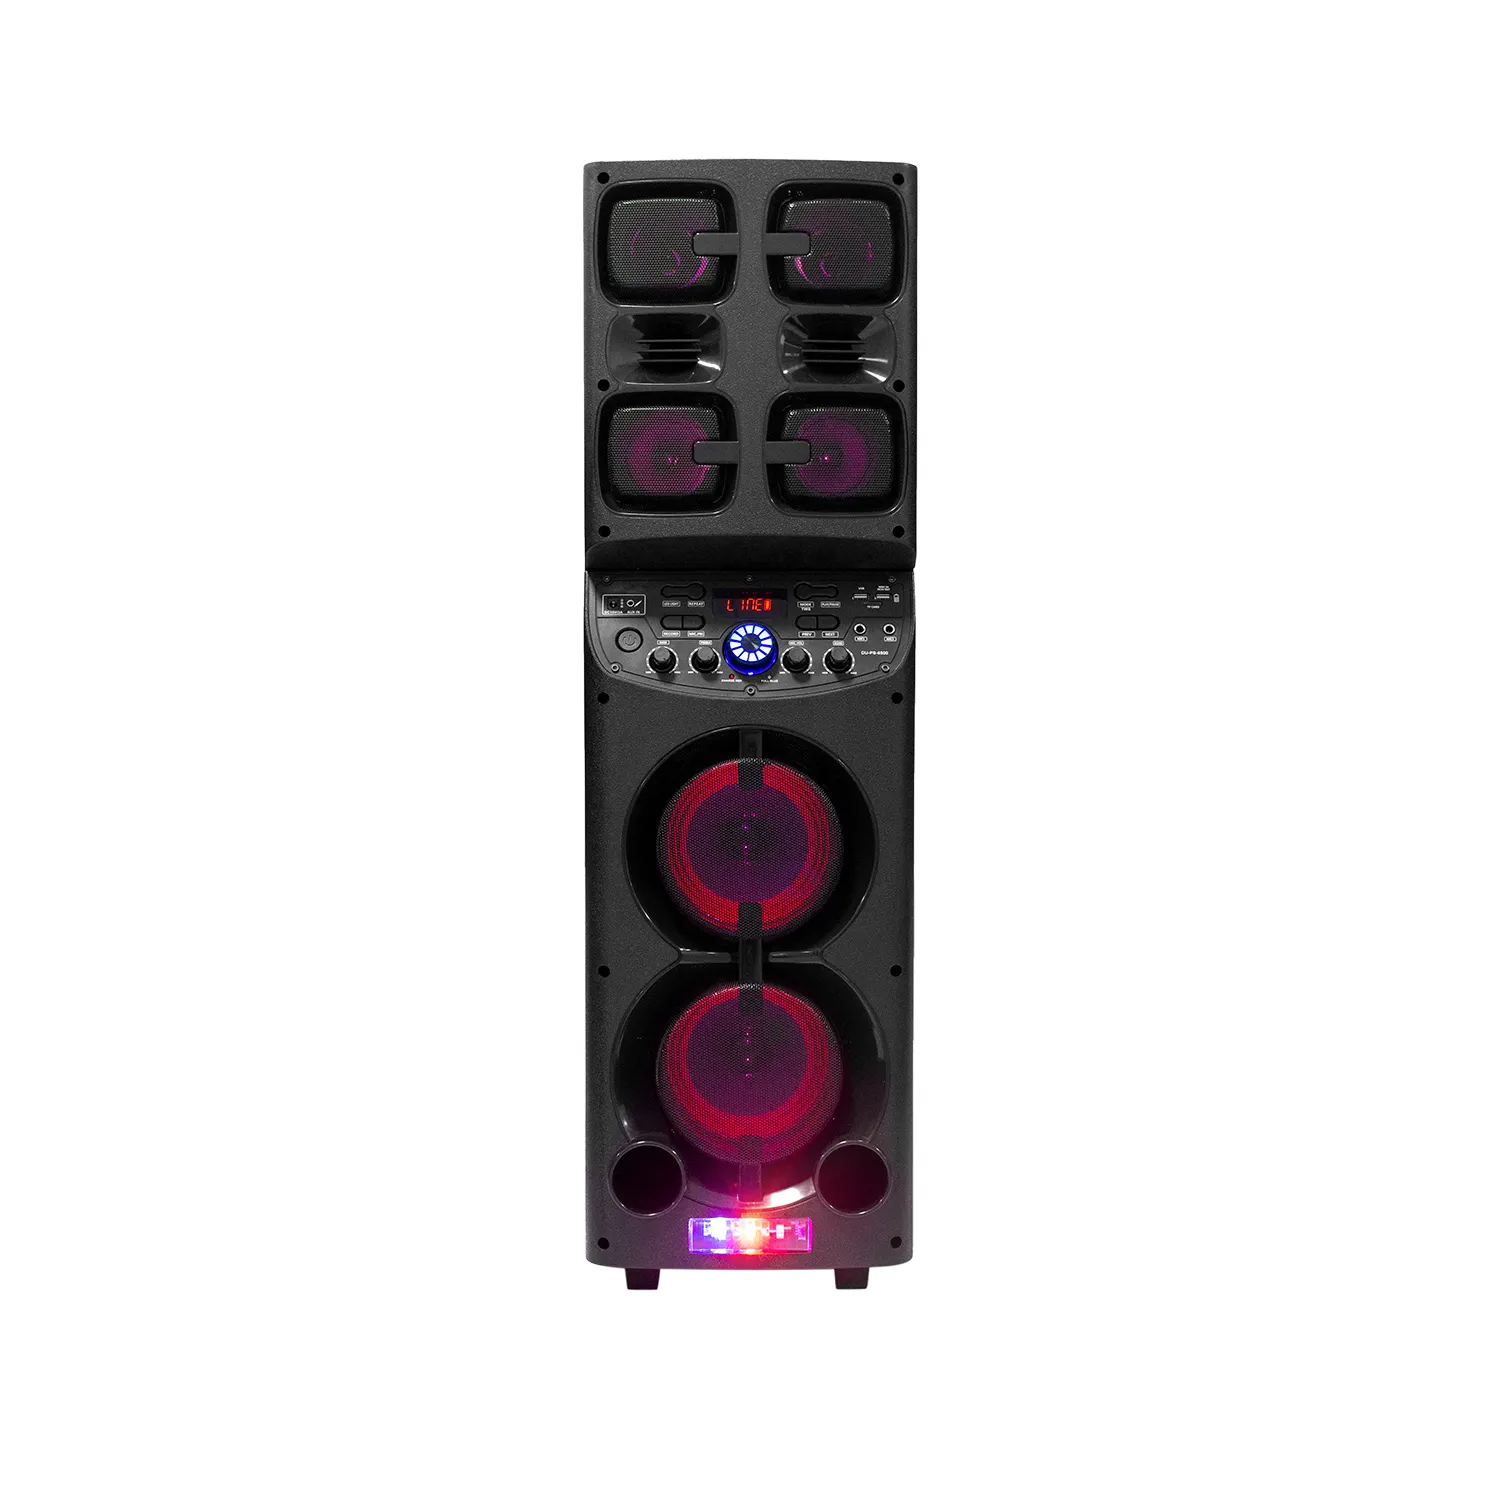 Caxia de som music soundbox Best Seller 2*6.5" Woofers Wireless Portable disco lights Speaker Partybox310 for Karaoke